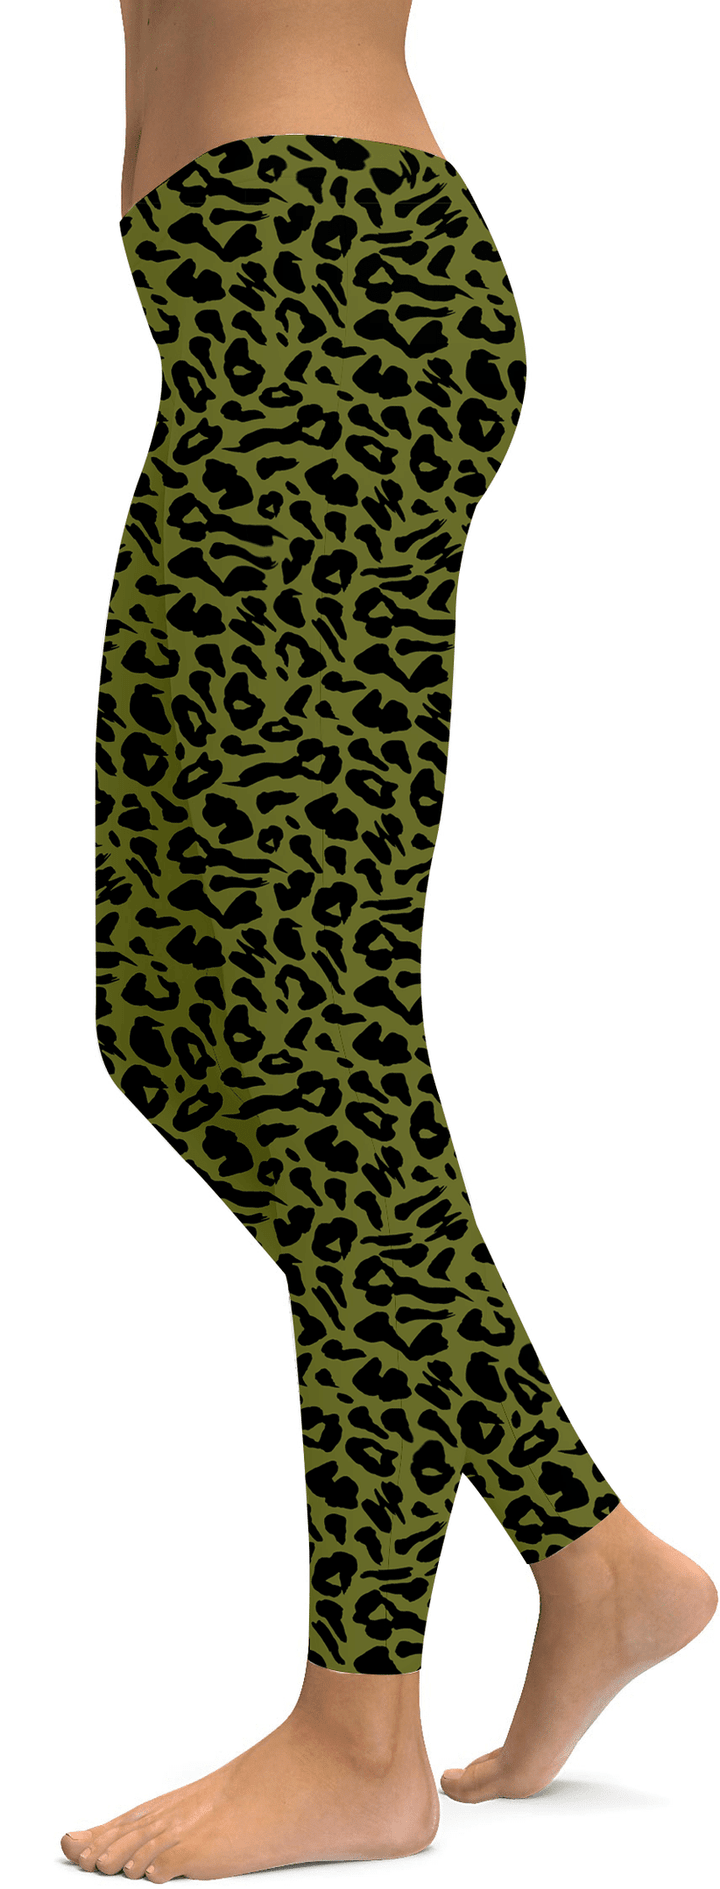 Olive Green Leopard Skin High-Waisted Leggings